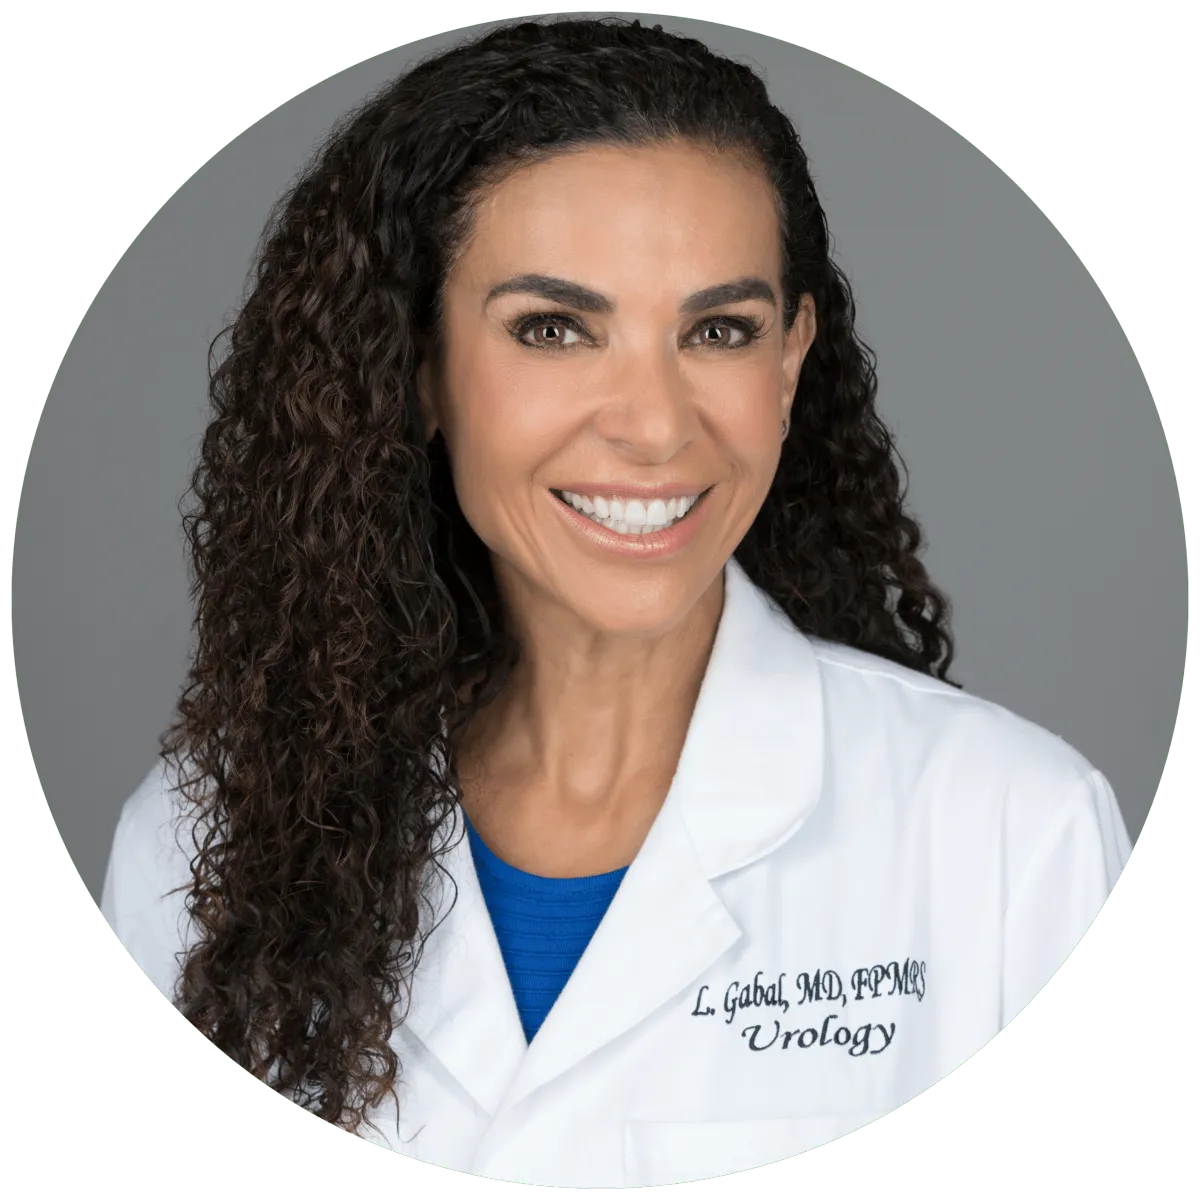 Dr. Lamia Gabal